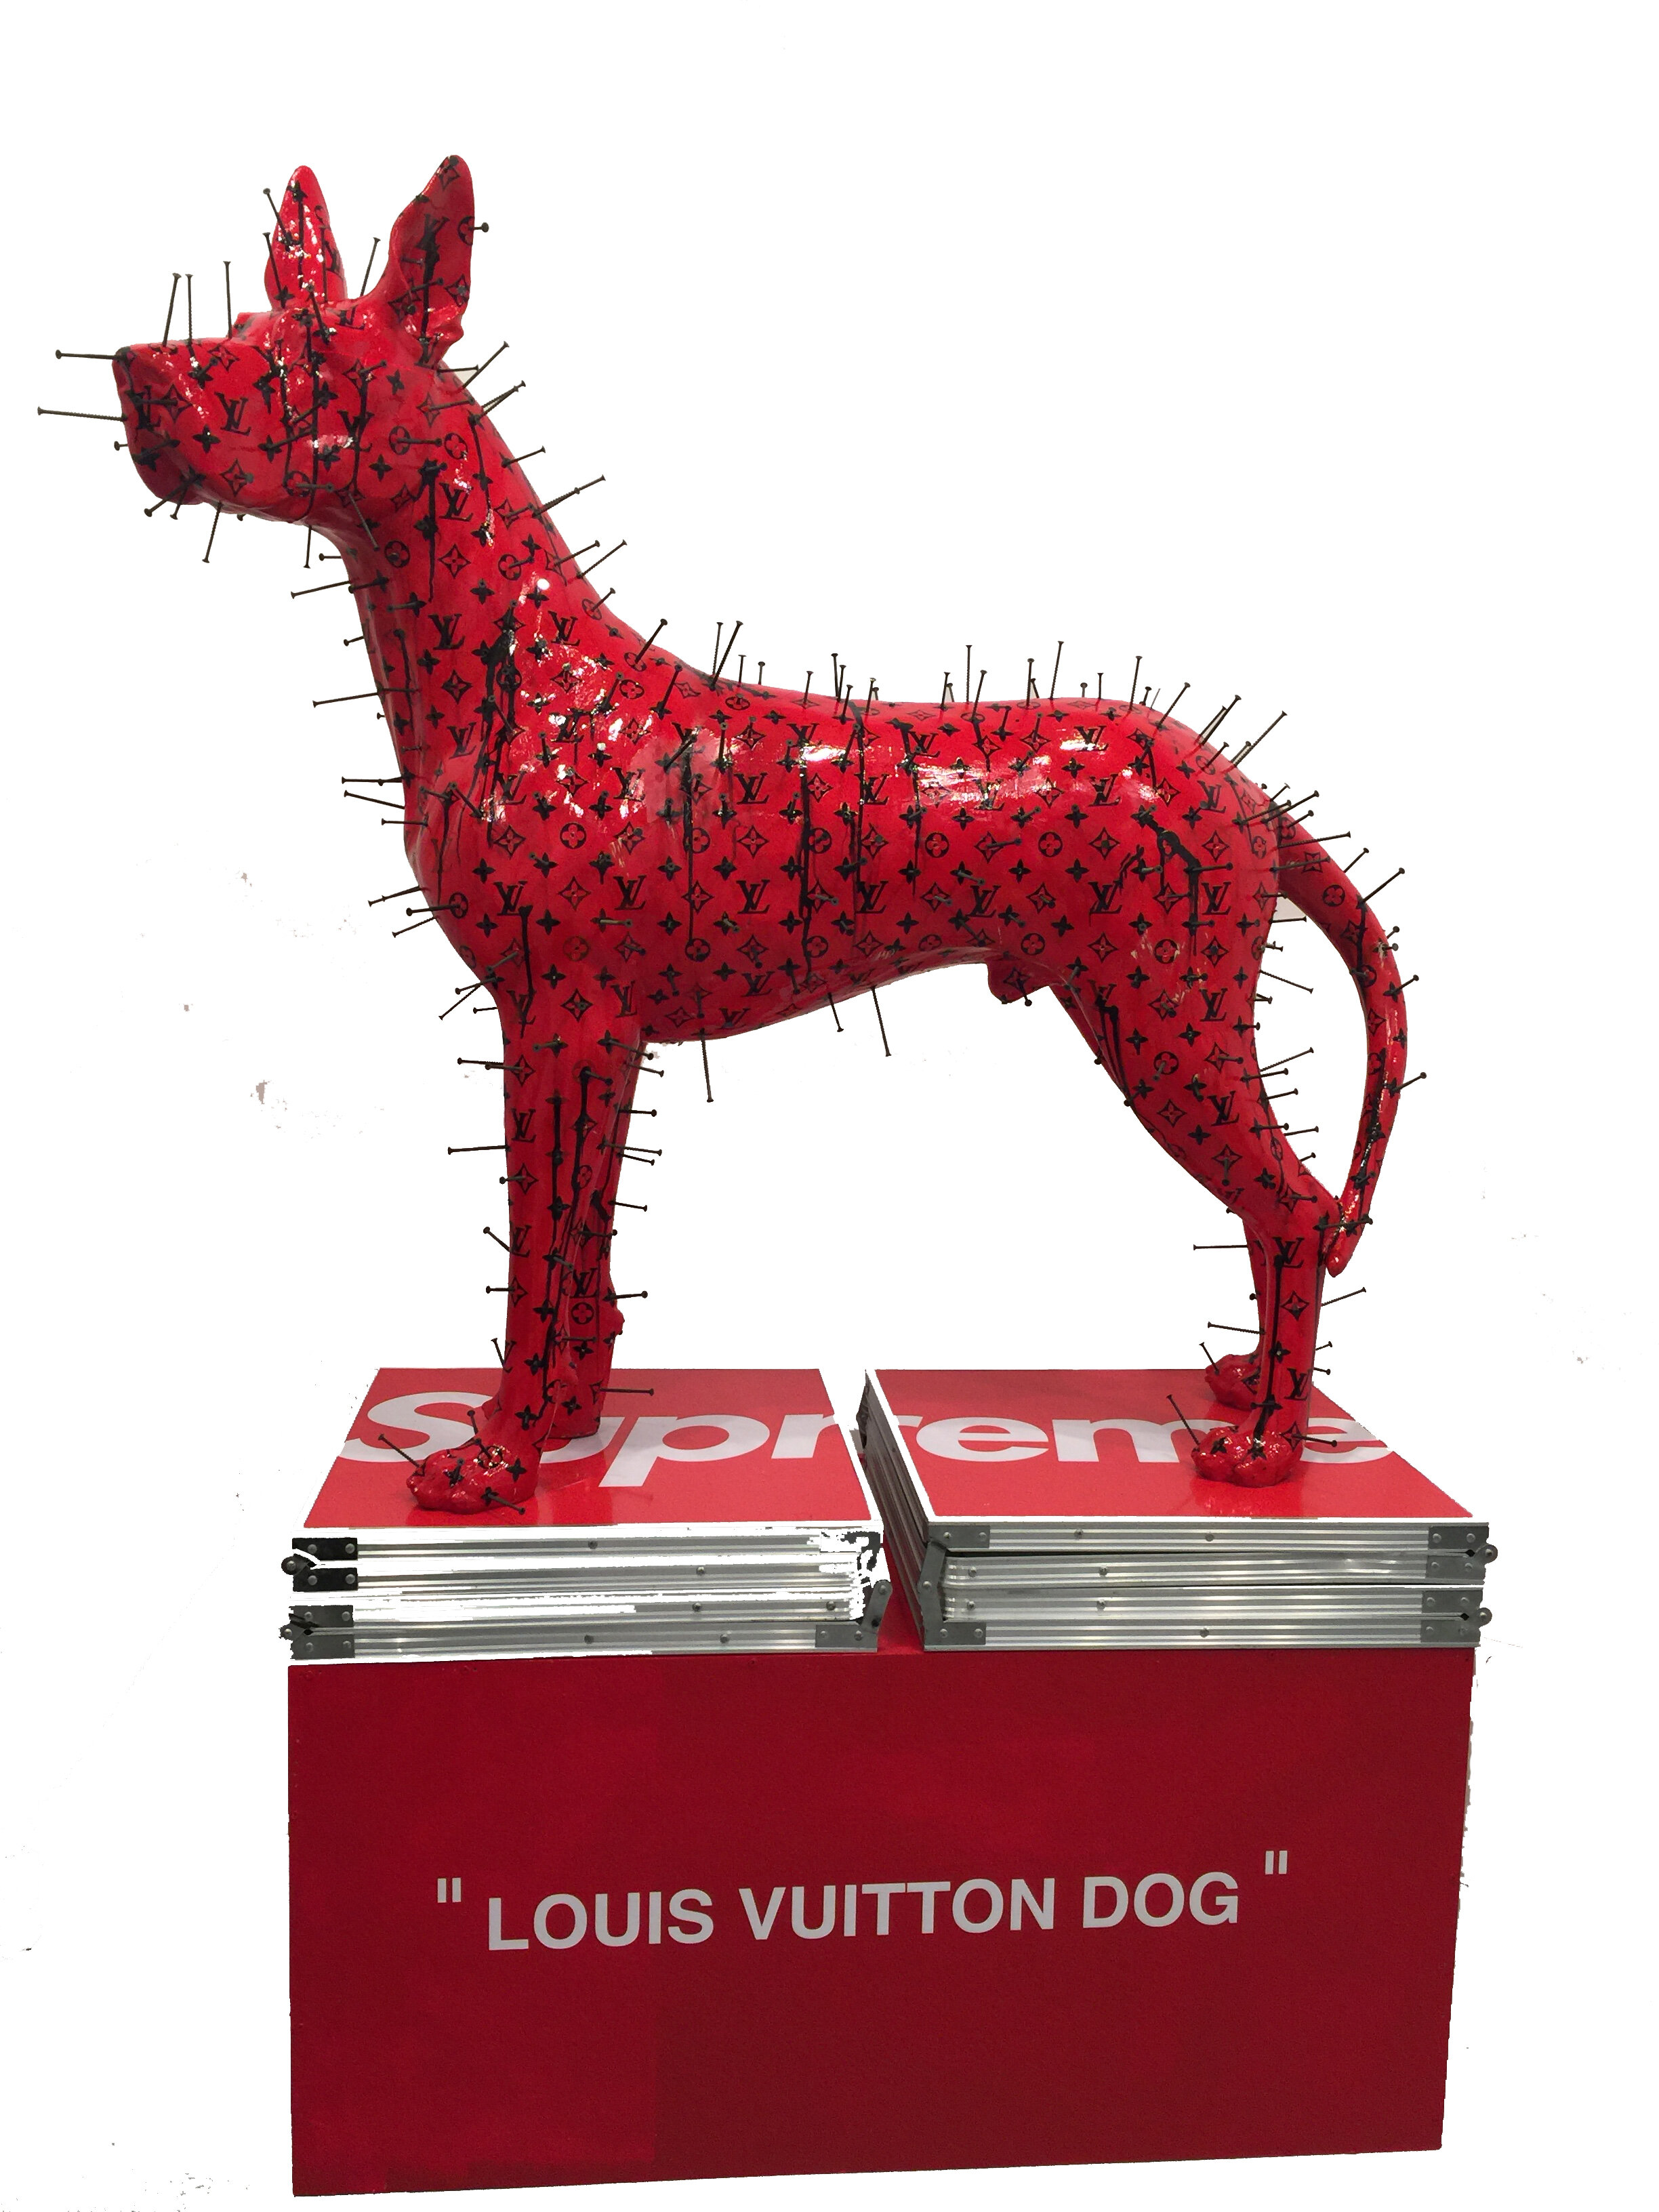 Louis Vuitton Dog, 2019